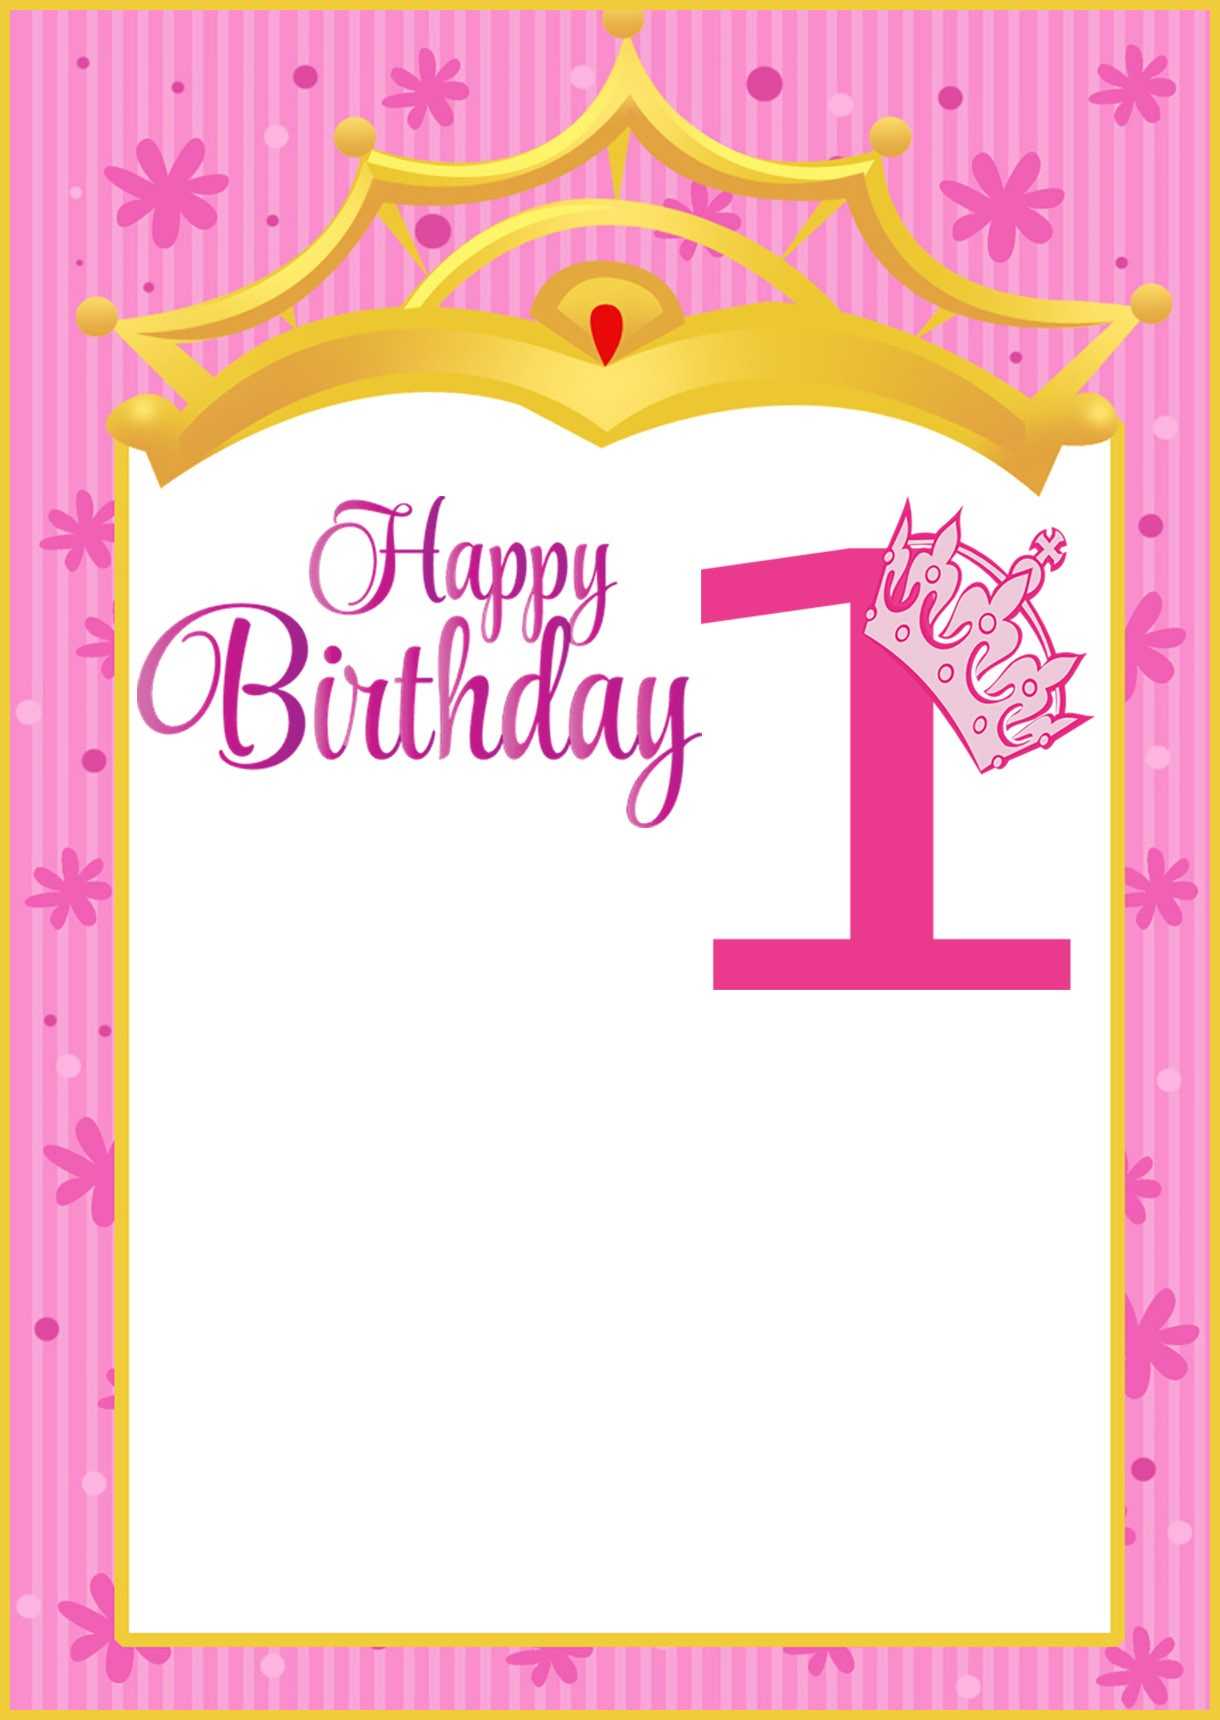 Printable First Birthday Invitation Card | Invitations Online Inside First Birthday Invitation Card Template